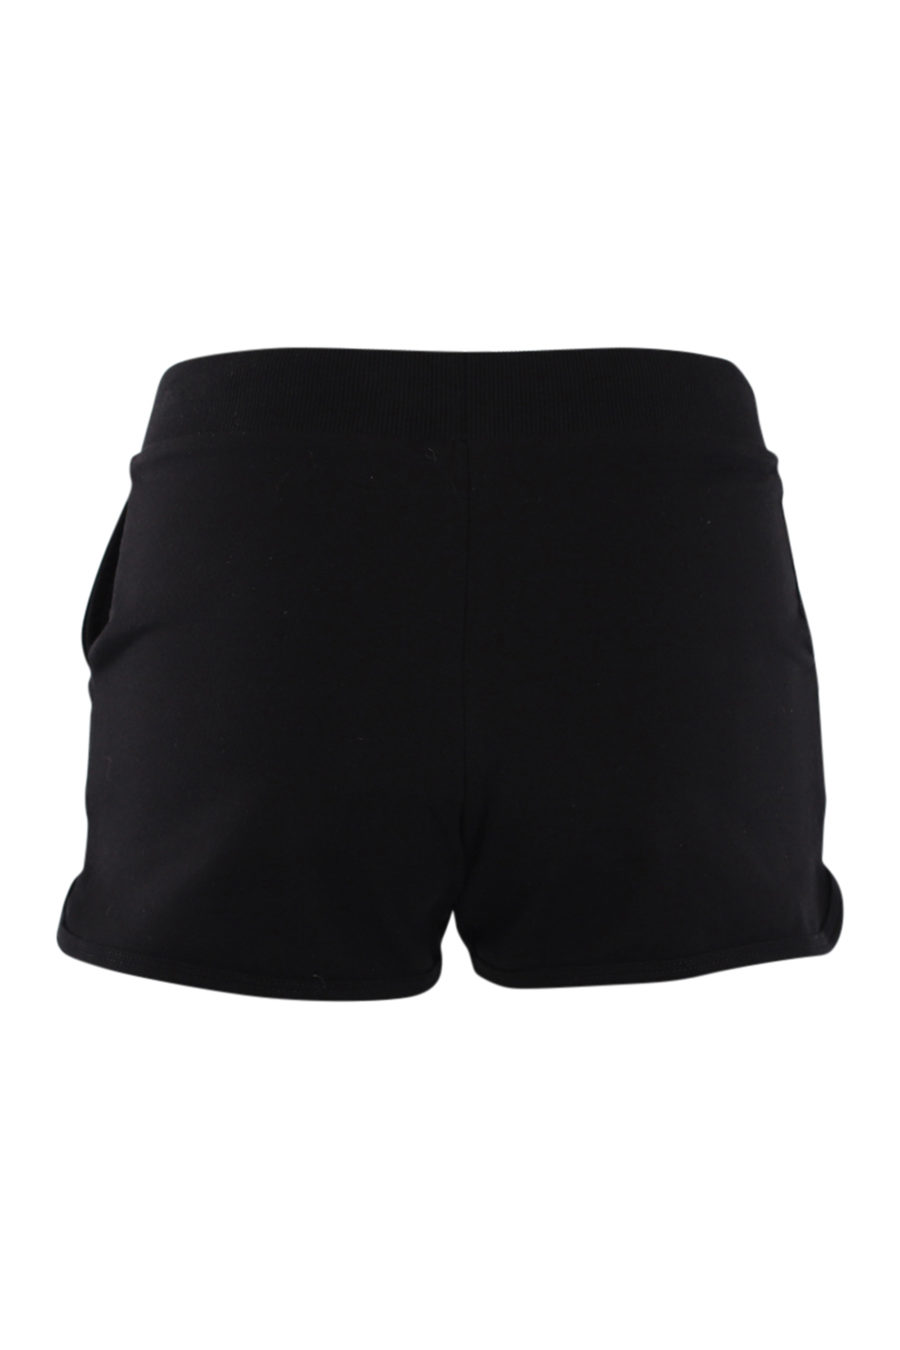 Black shorts with tropical logo - IMG 0559